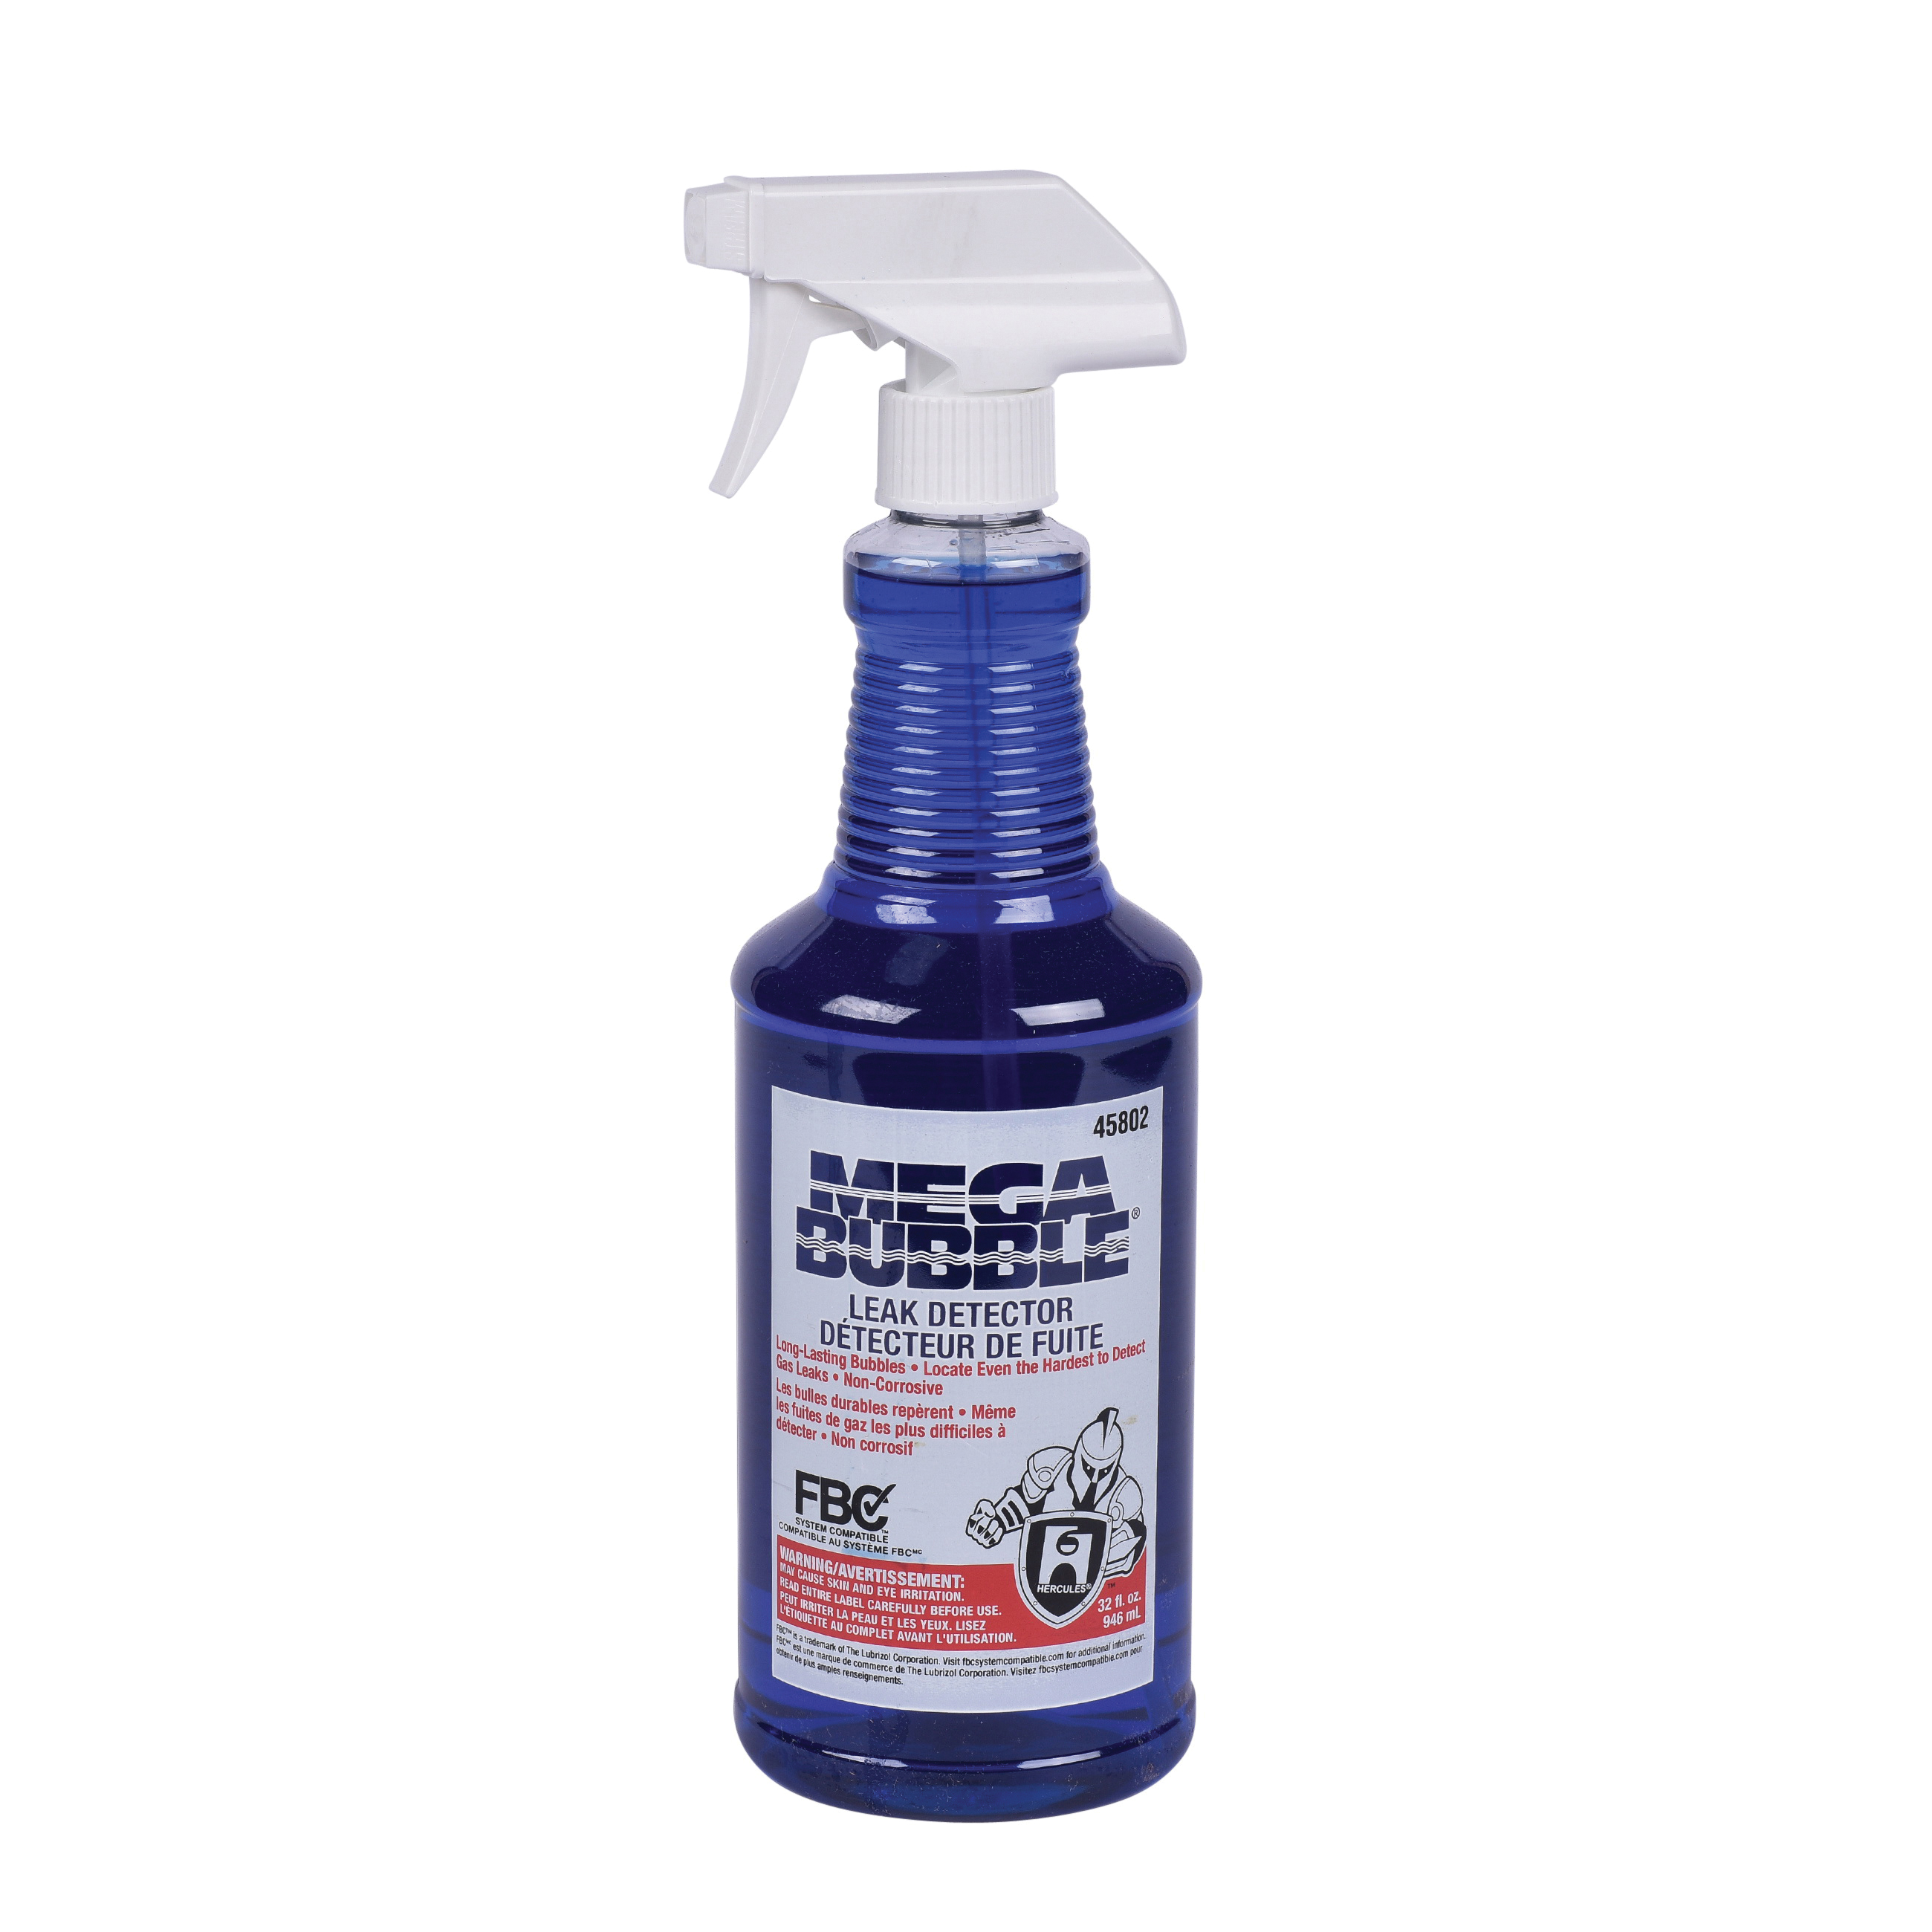 Hercules® Megabubble® 45802 Leak Detector With Sprayer, 32 oz Bottle, Liquid Form, Blue, Odorless Odor/Scent